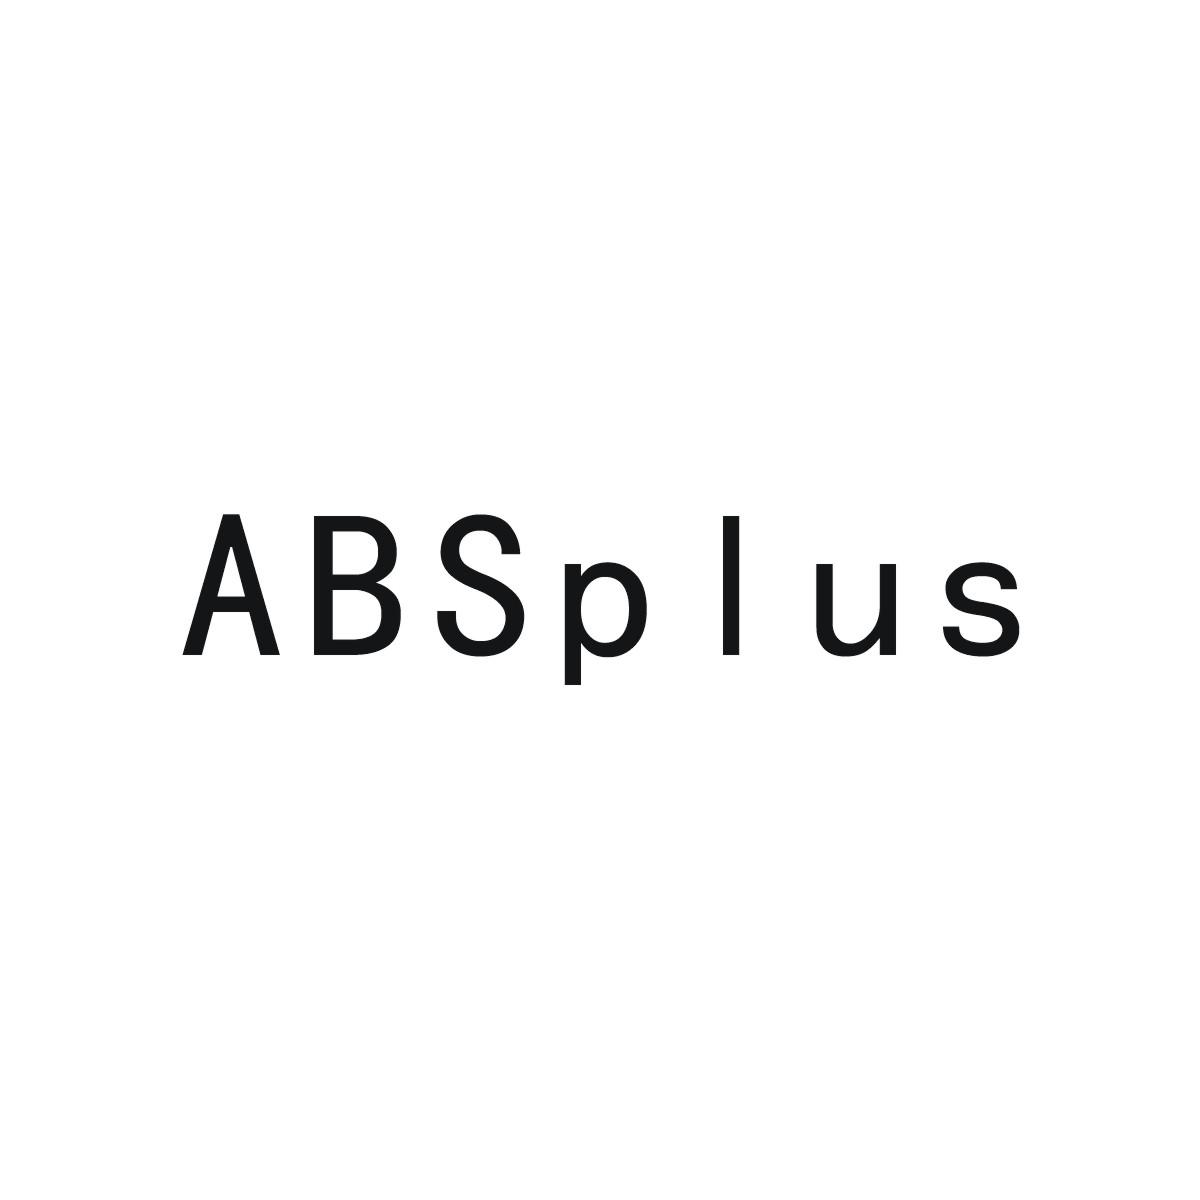 ABSPLUS石棉板商标转让费用买卖交易流程